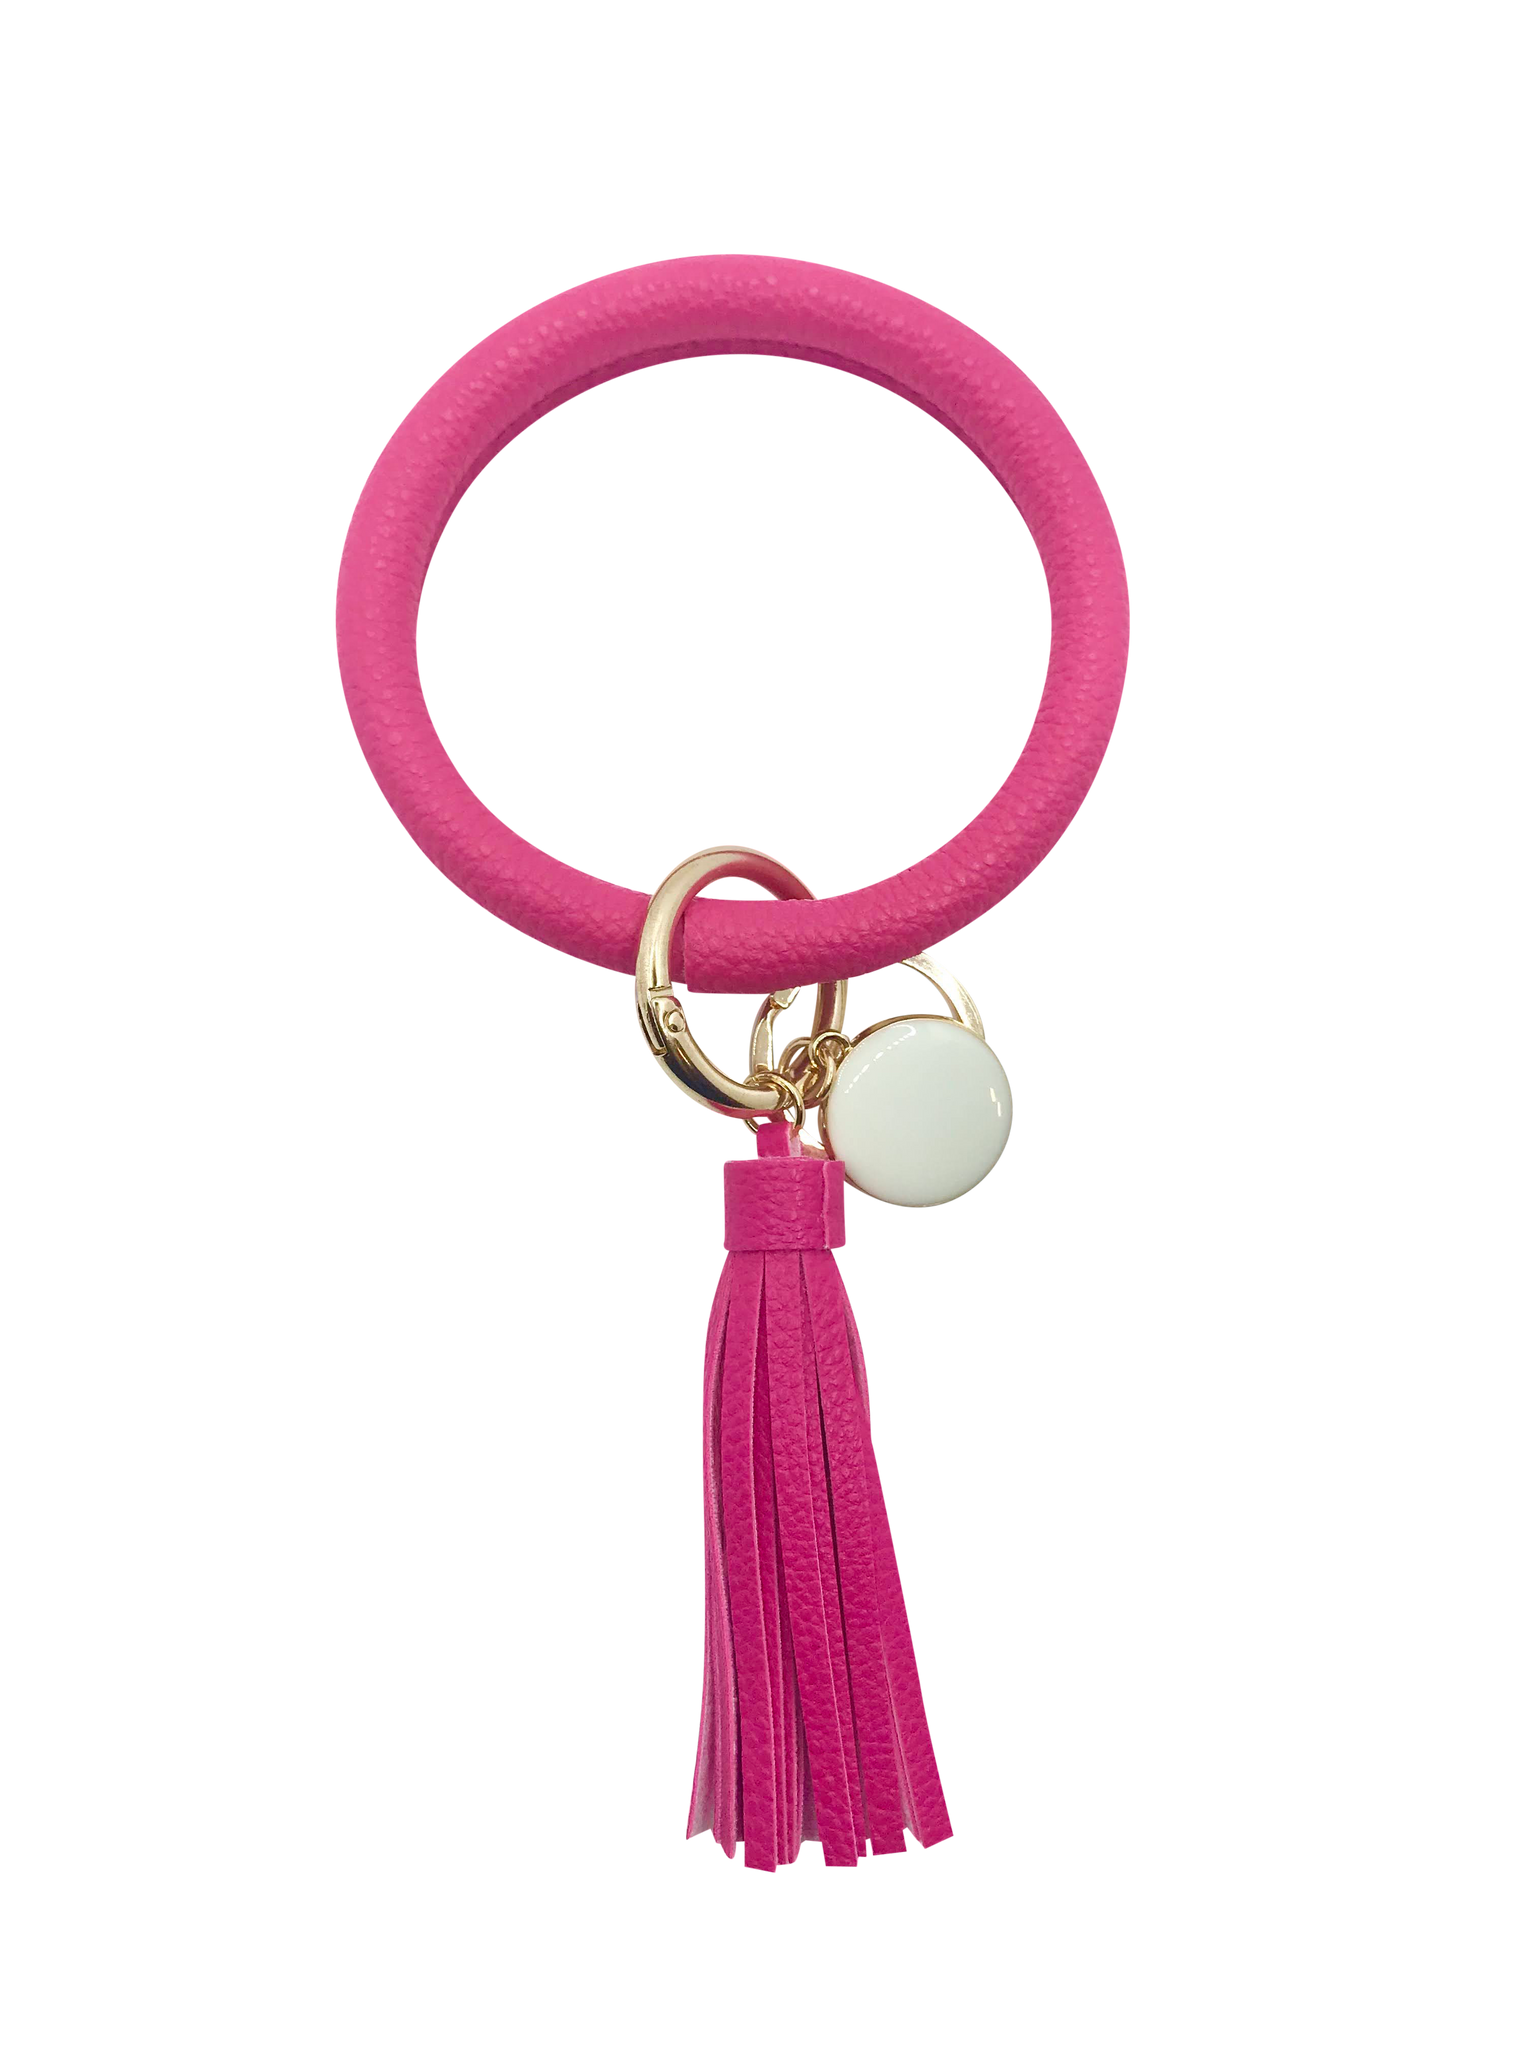 Leather Bracelet Key Ring Bangle Keyring, Tassel Ring Key Ring Keychain  Wristlet for Women Girls, Pink